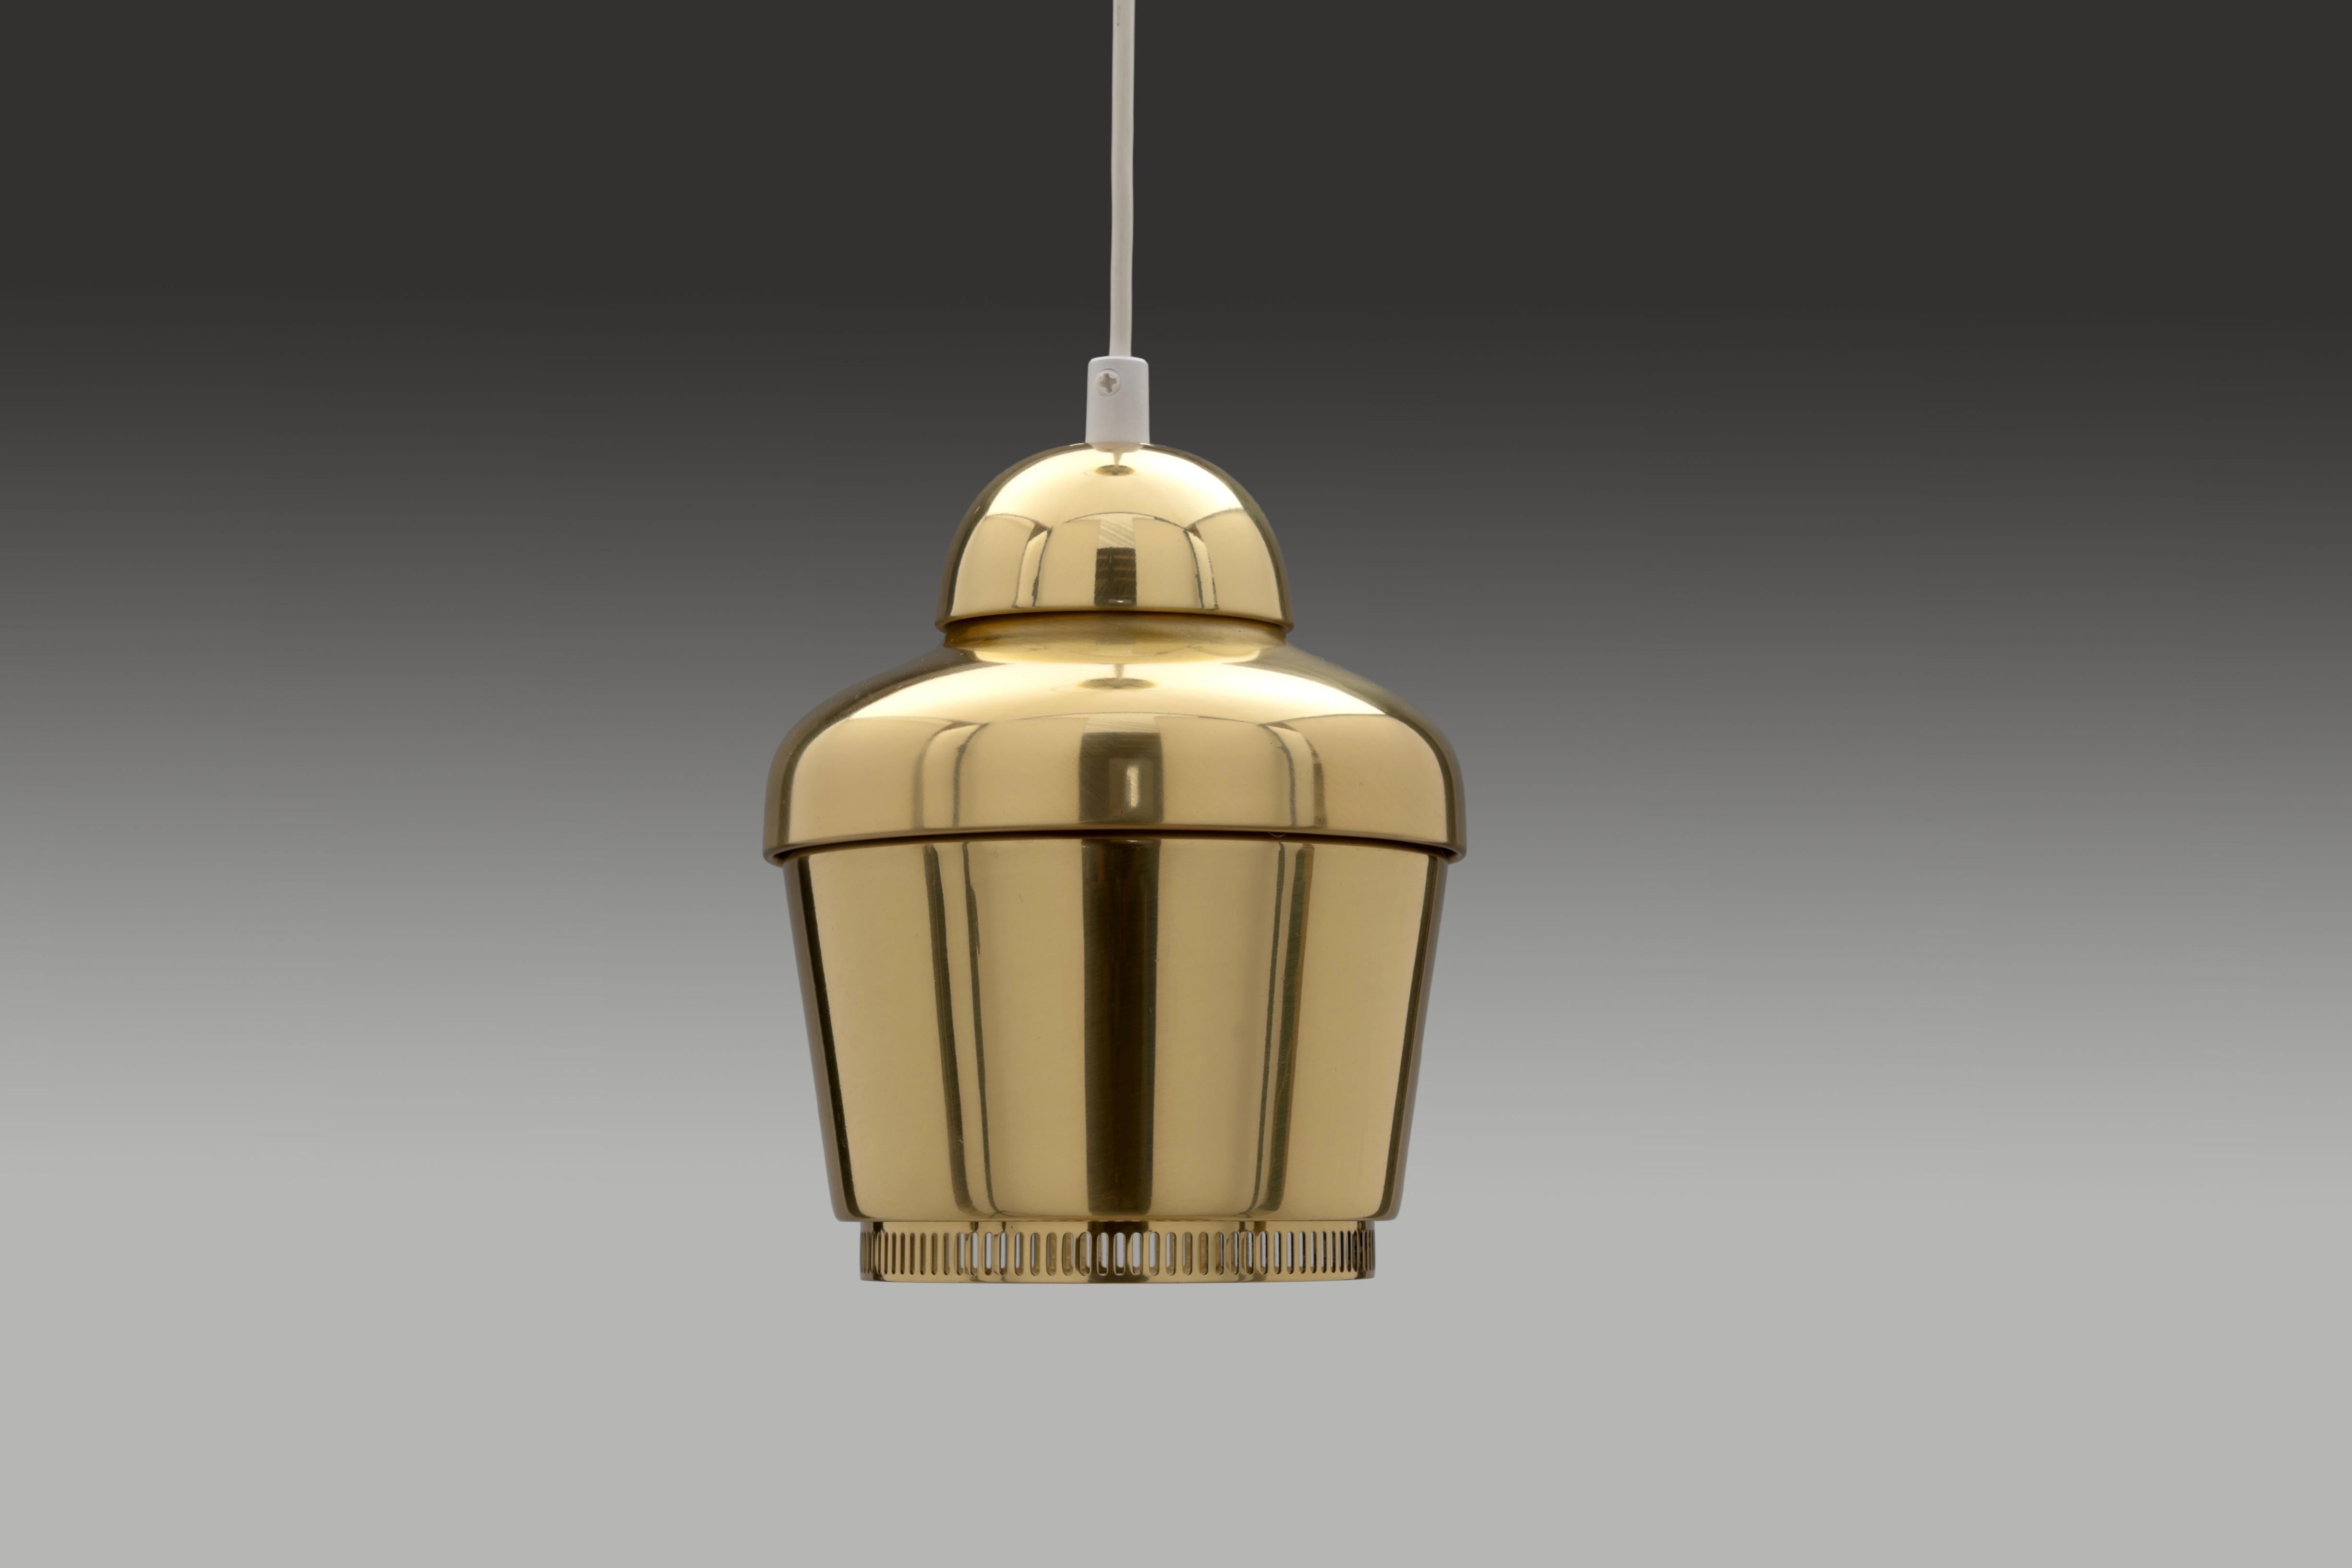 Messing-Anhänger „Kultakello“ Modell A 330 „Goldene Glocke“ von Alvar Aalto im Angebot 1